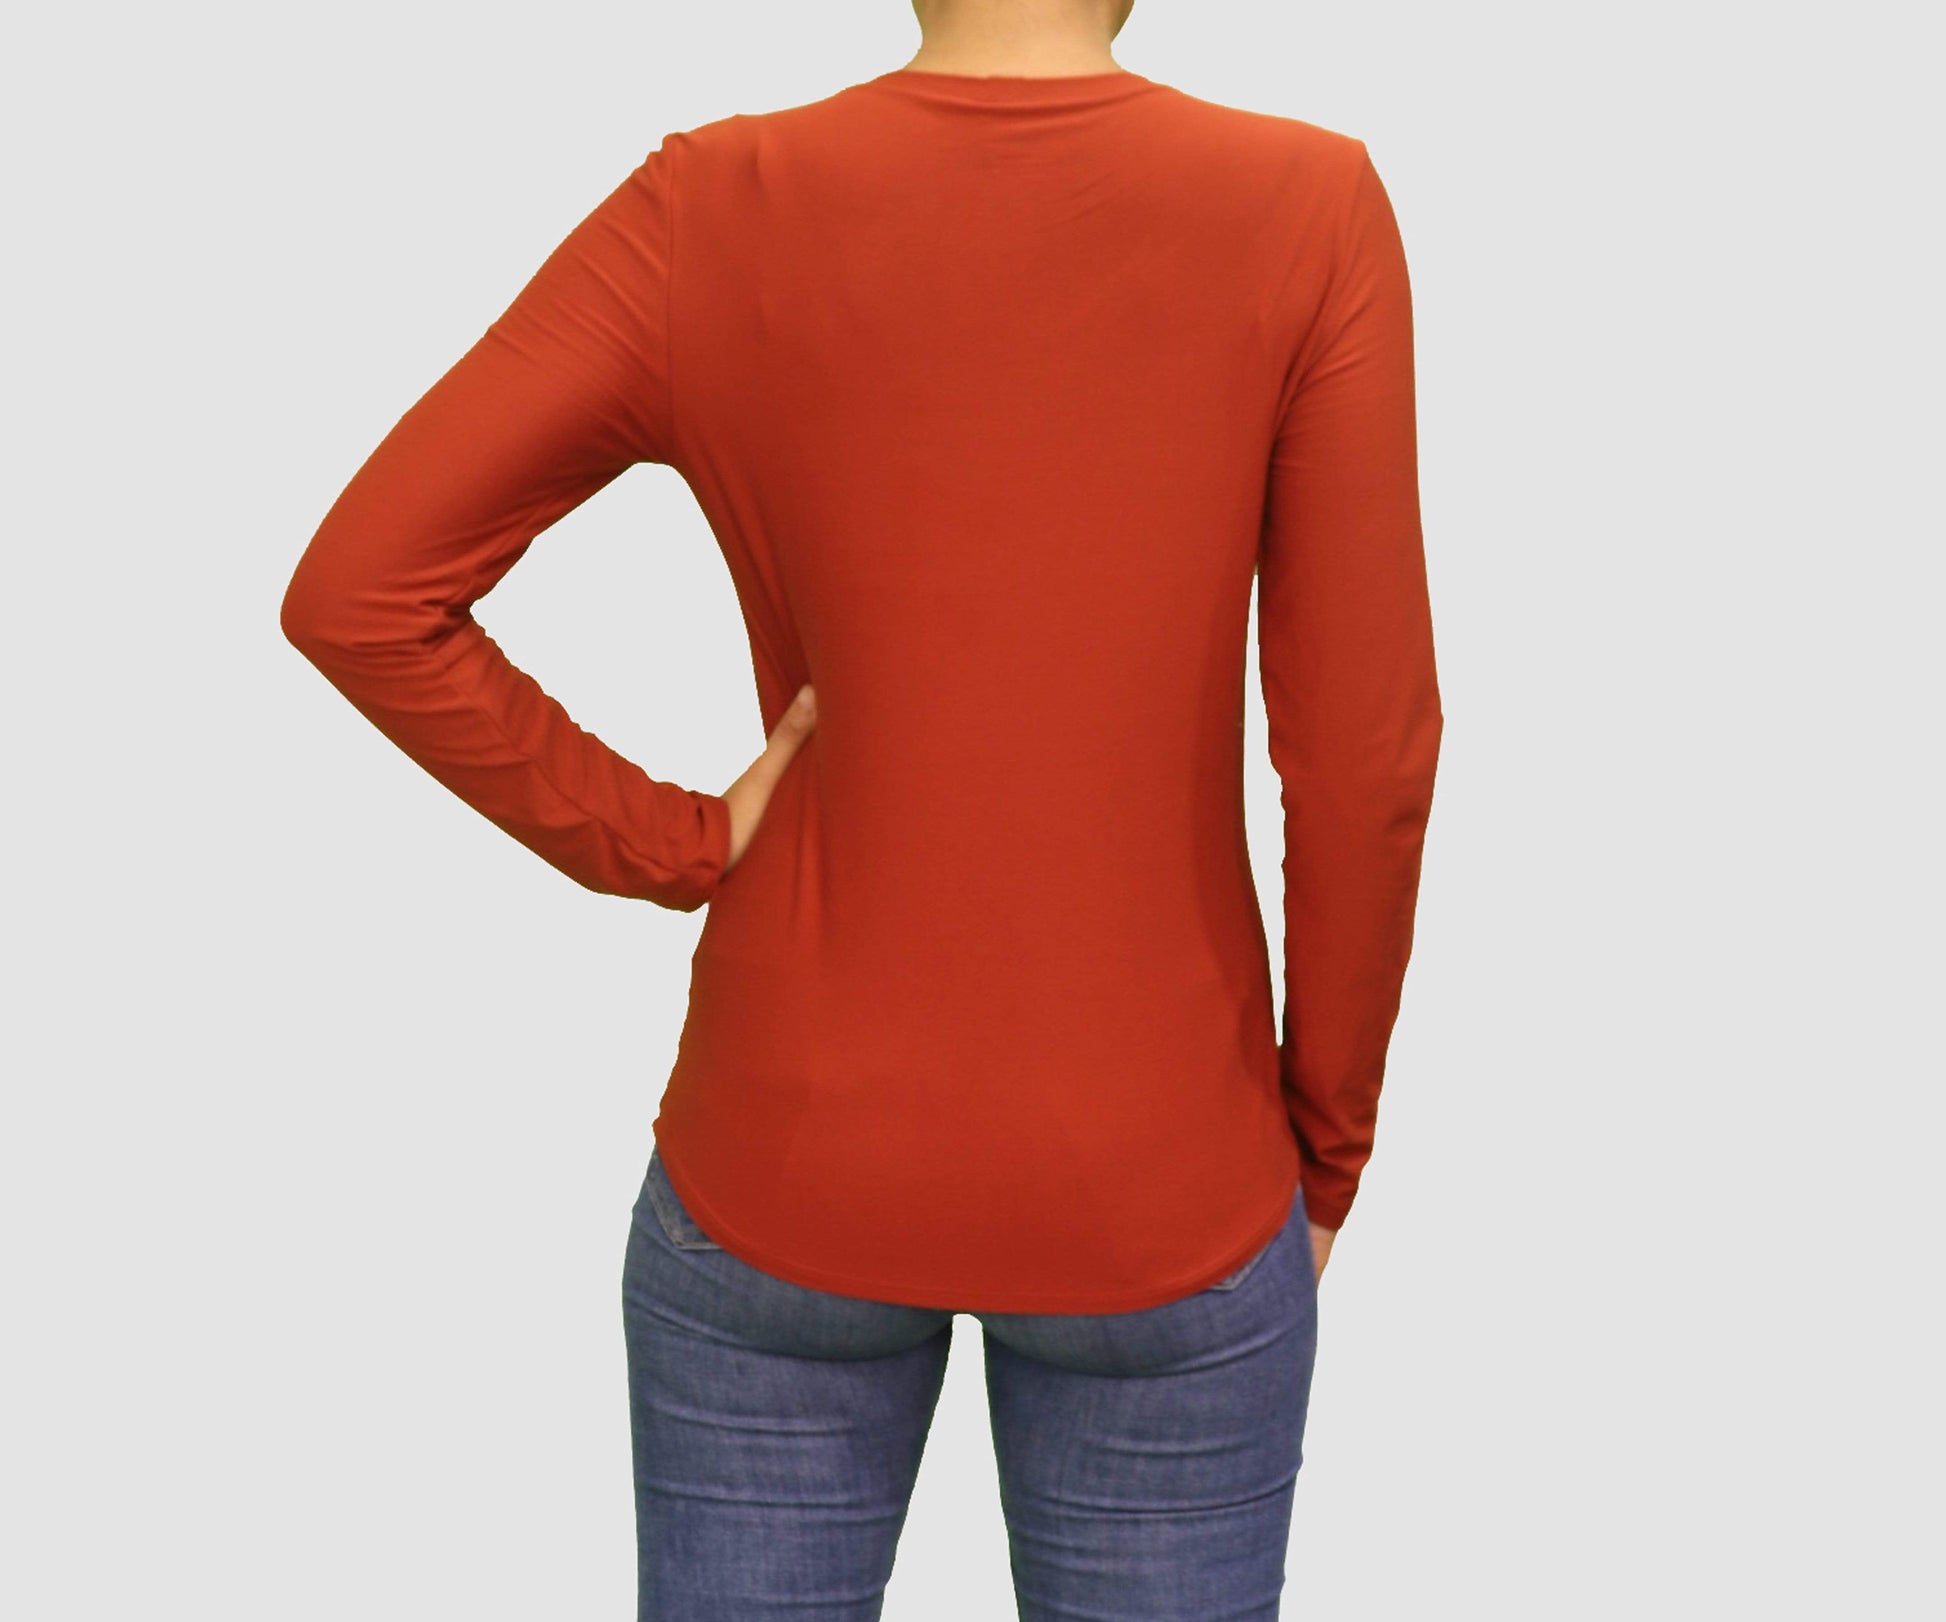 No Boundaries Womens Tops Medium - Large / Rust Orange Long Sleeve Top